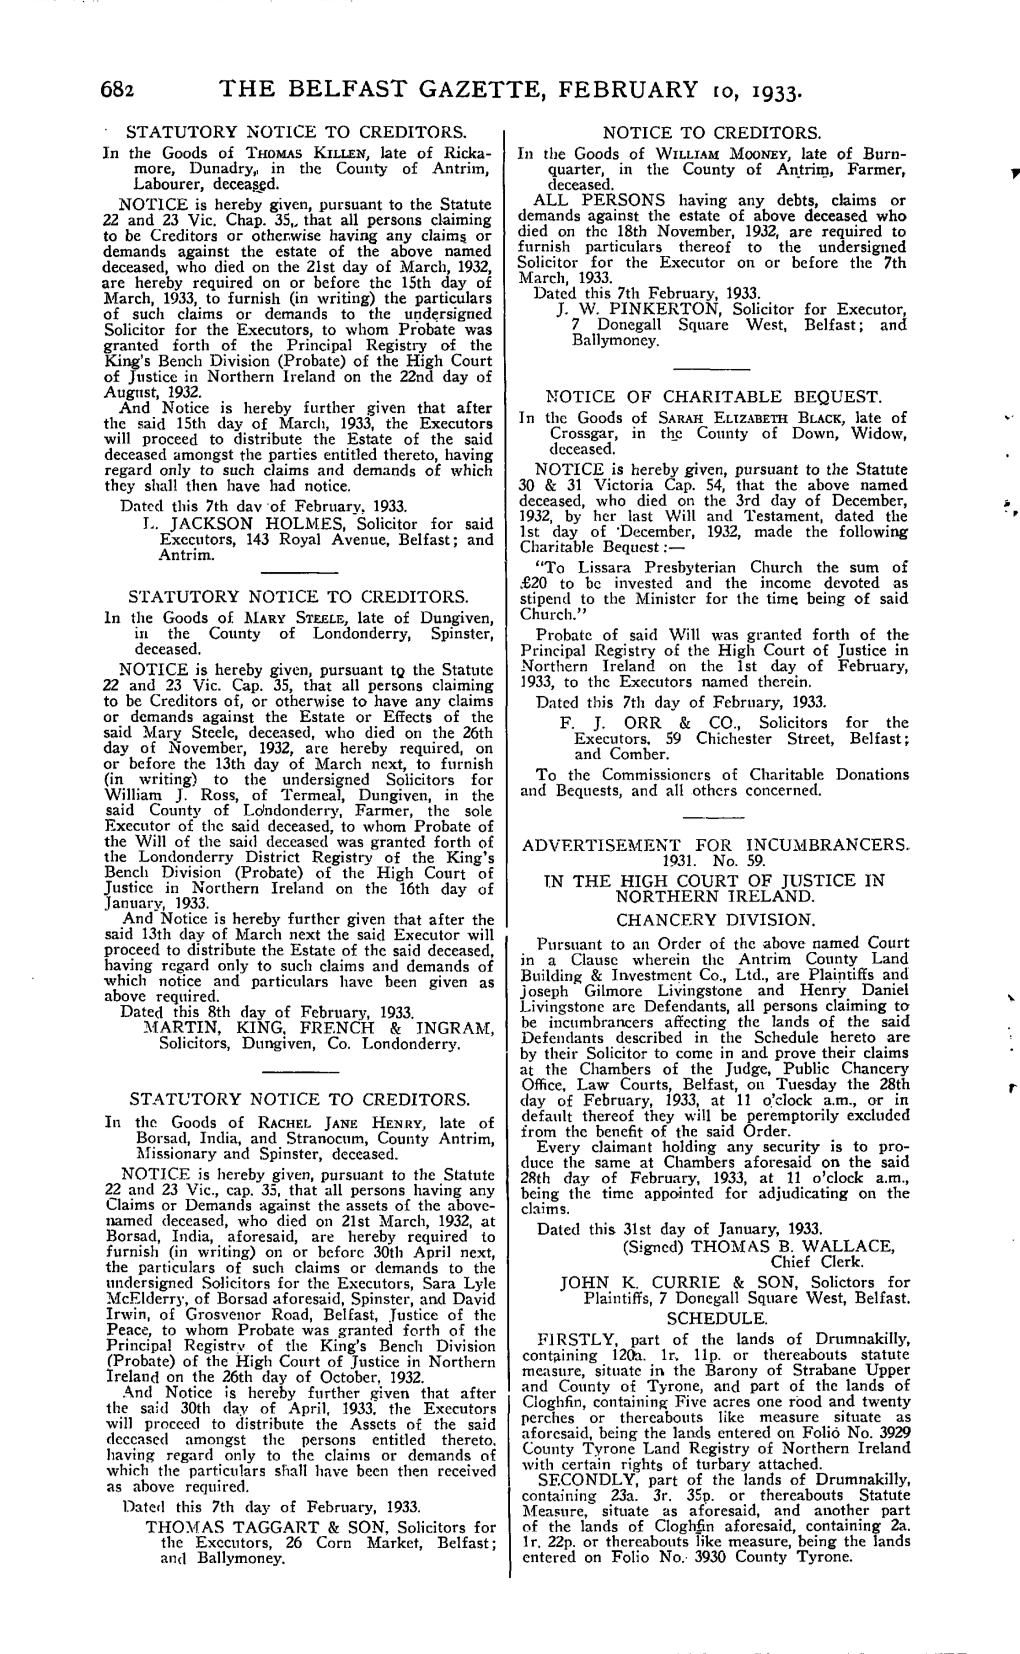 The Belfast Gazette, February 10, 1933